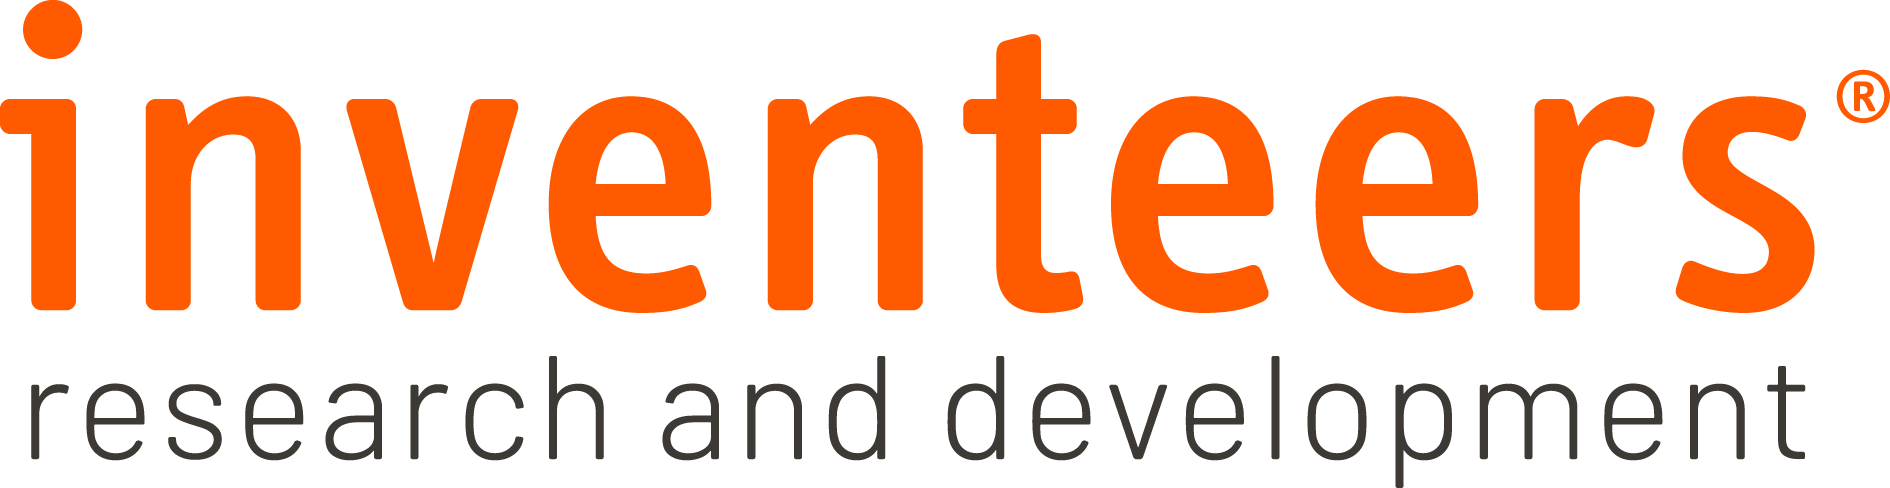 Inventeers Logo